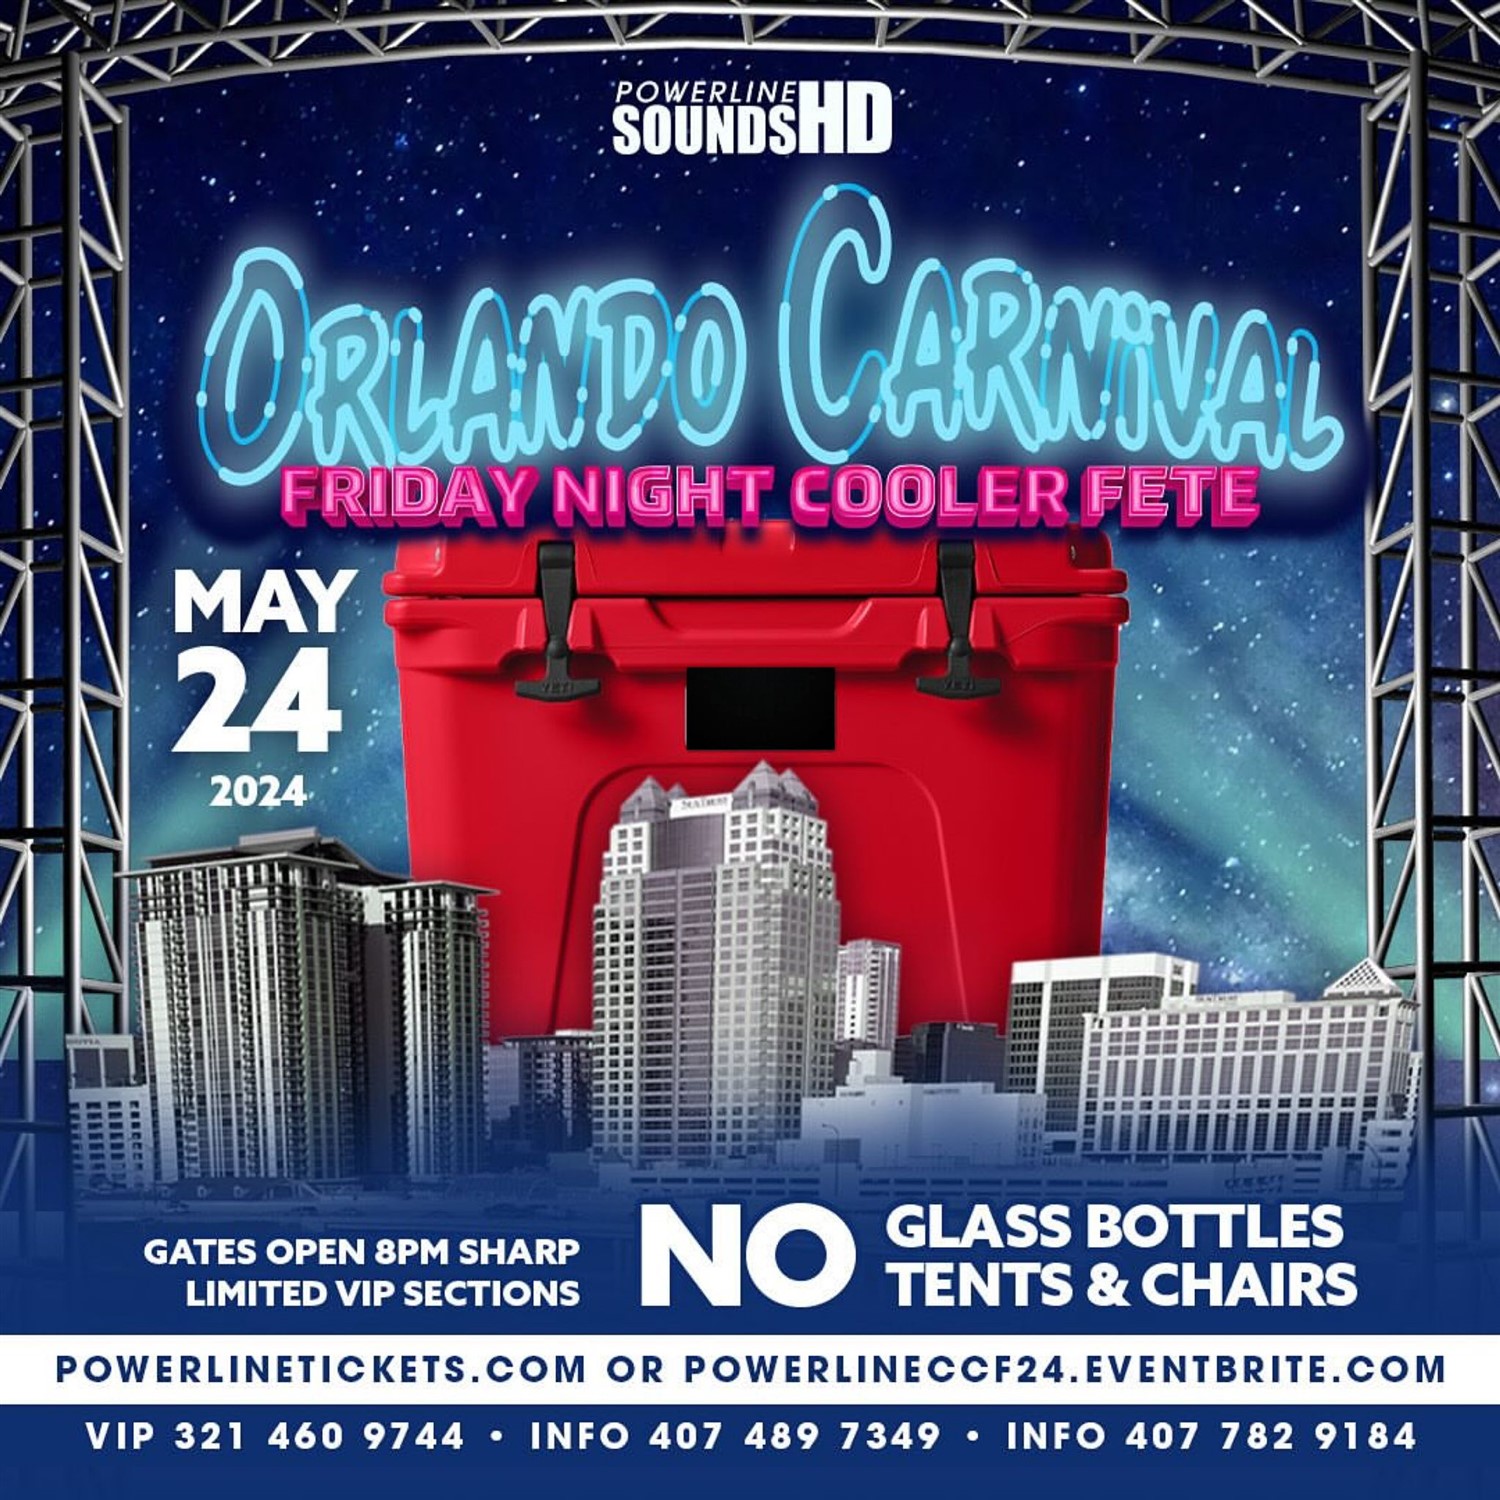 POWERLINE'S 2024 Annual Orlando Carnival Cooler Fete!! NO GLASS BOTTLES